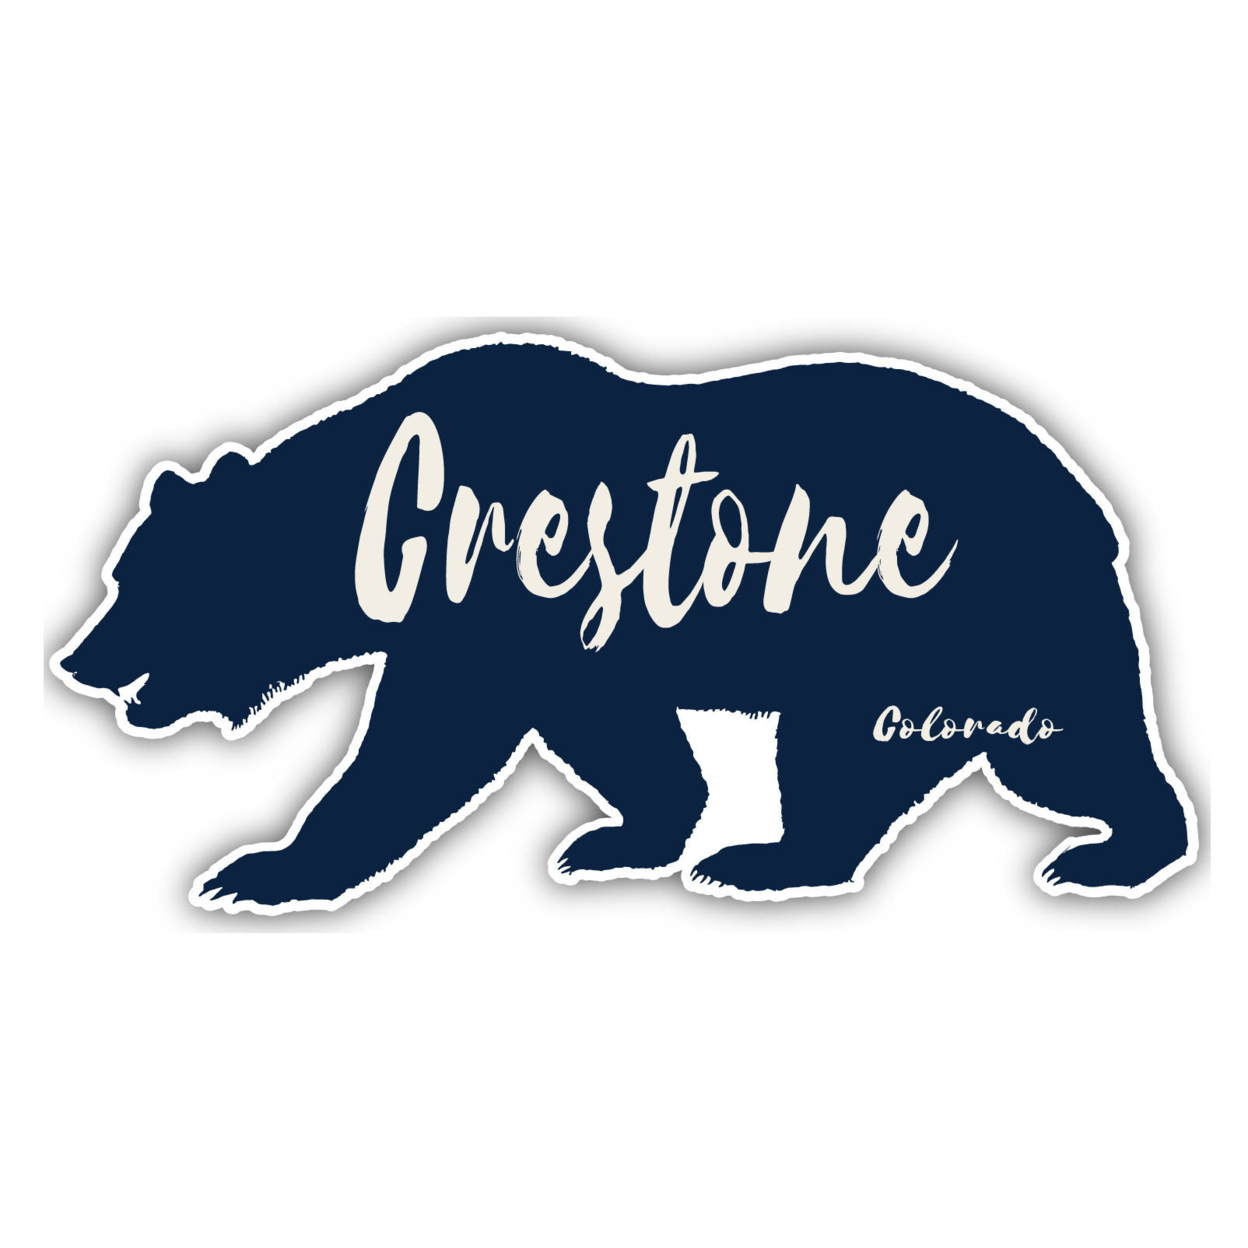 Crestone Colorado Souvenir Decorative Stickers (Choose Theme And Size) - Single Unit, 2-Inch, Bear